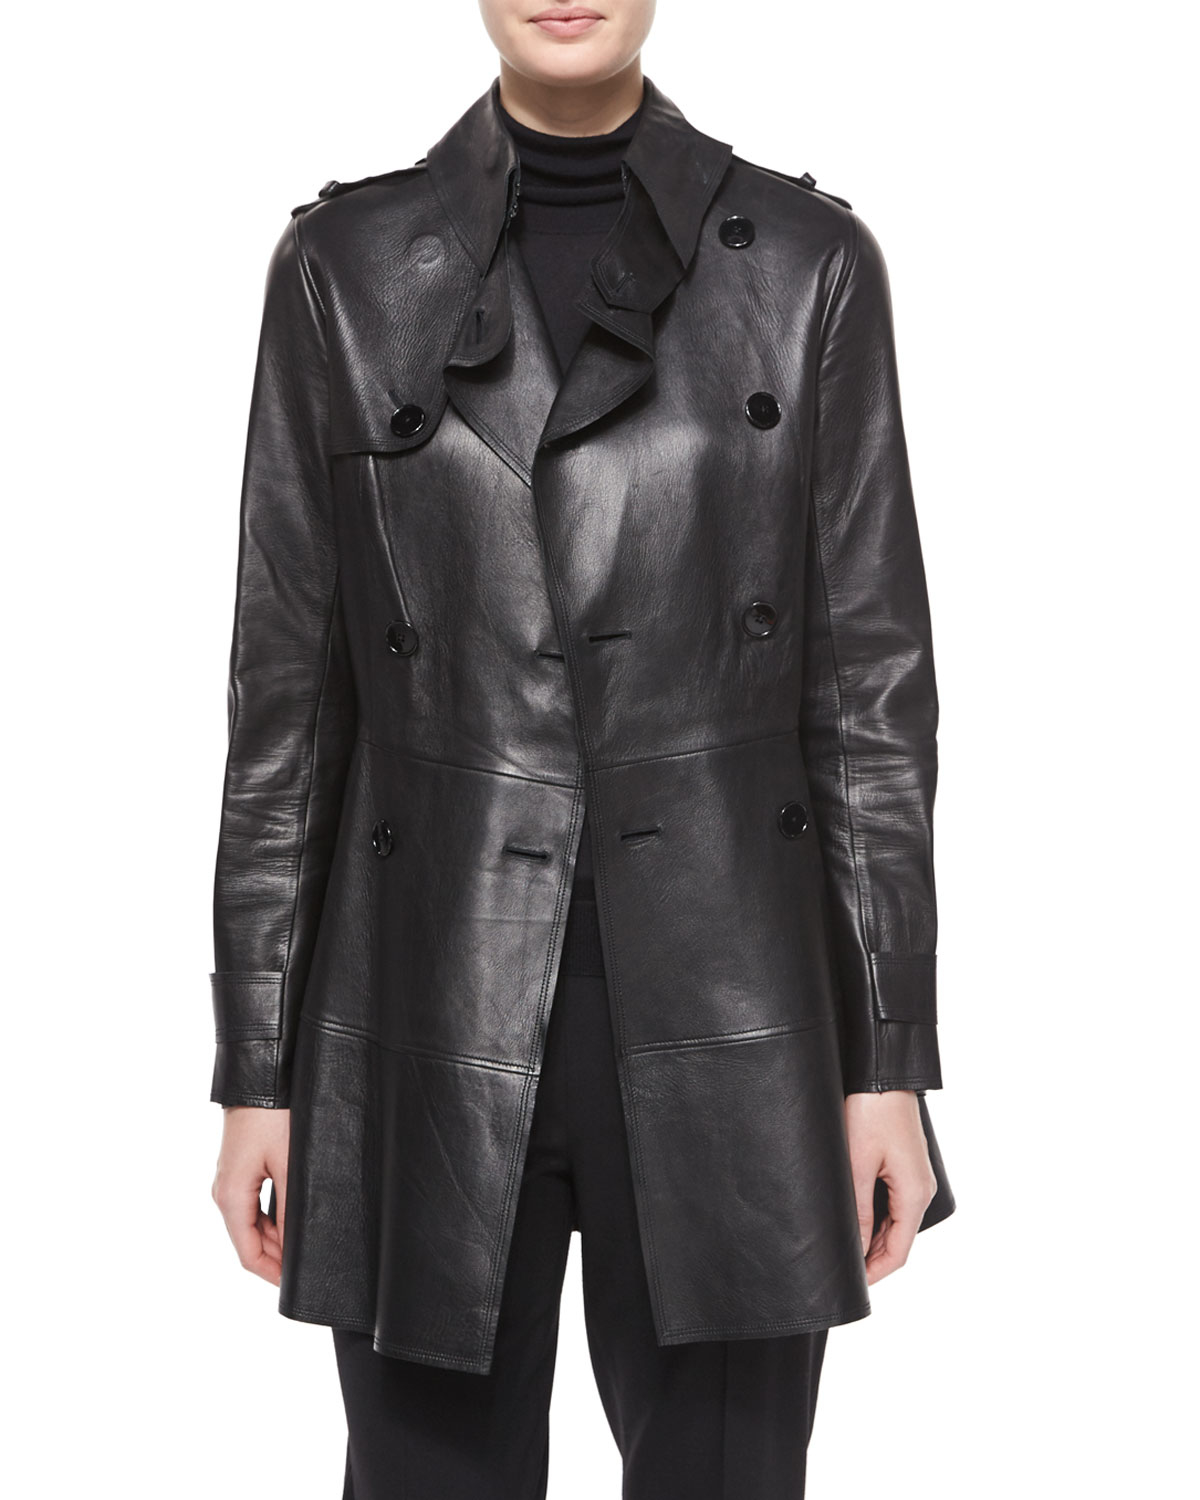 Lyst - Ralph Lauren Black Label Bonded Leather Trench Coat in Black